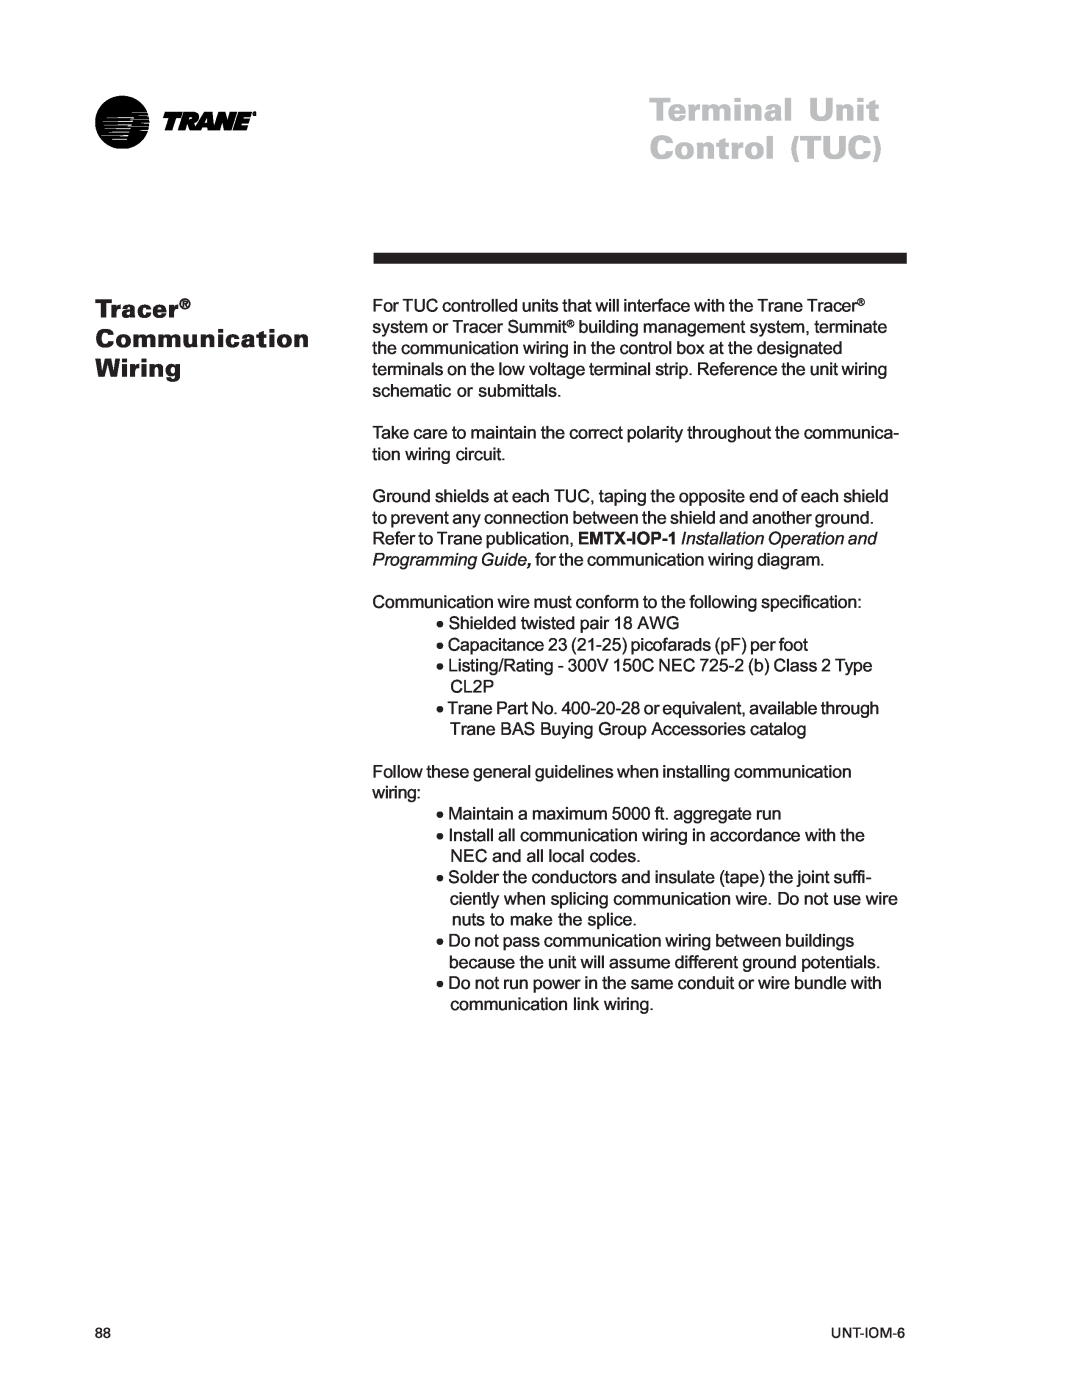 Trane LO manual Tracer Communication Wiring, Terminal Unit Control TUC 